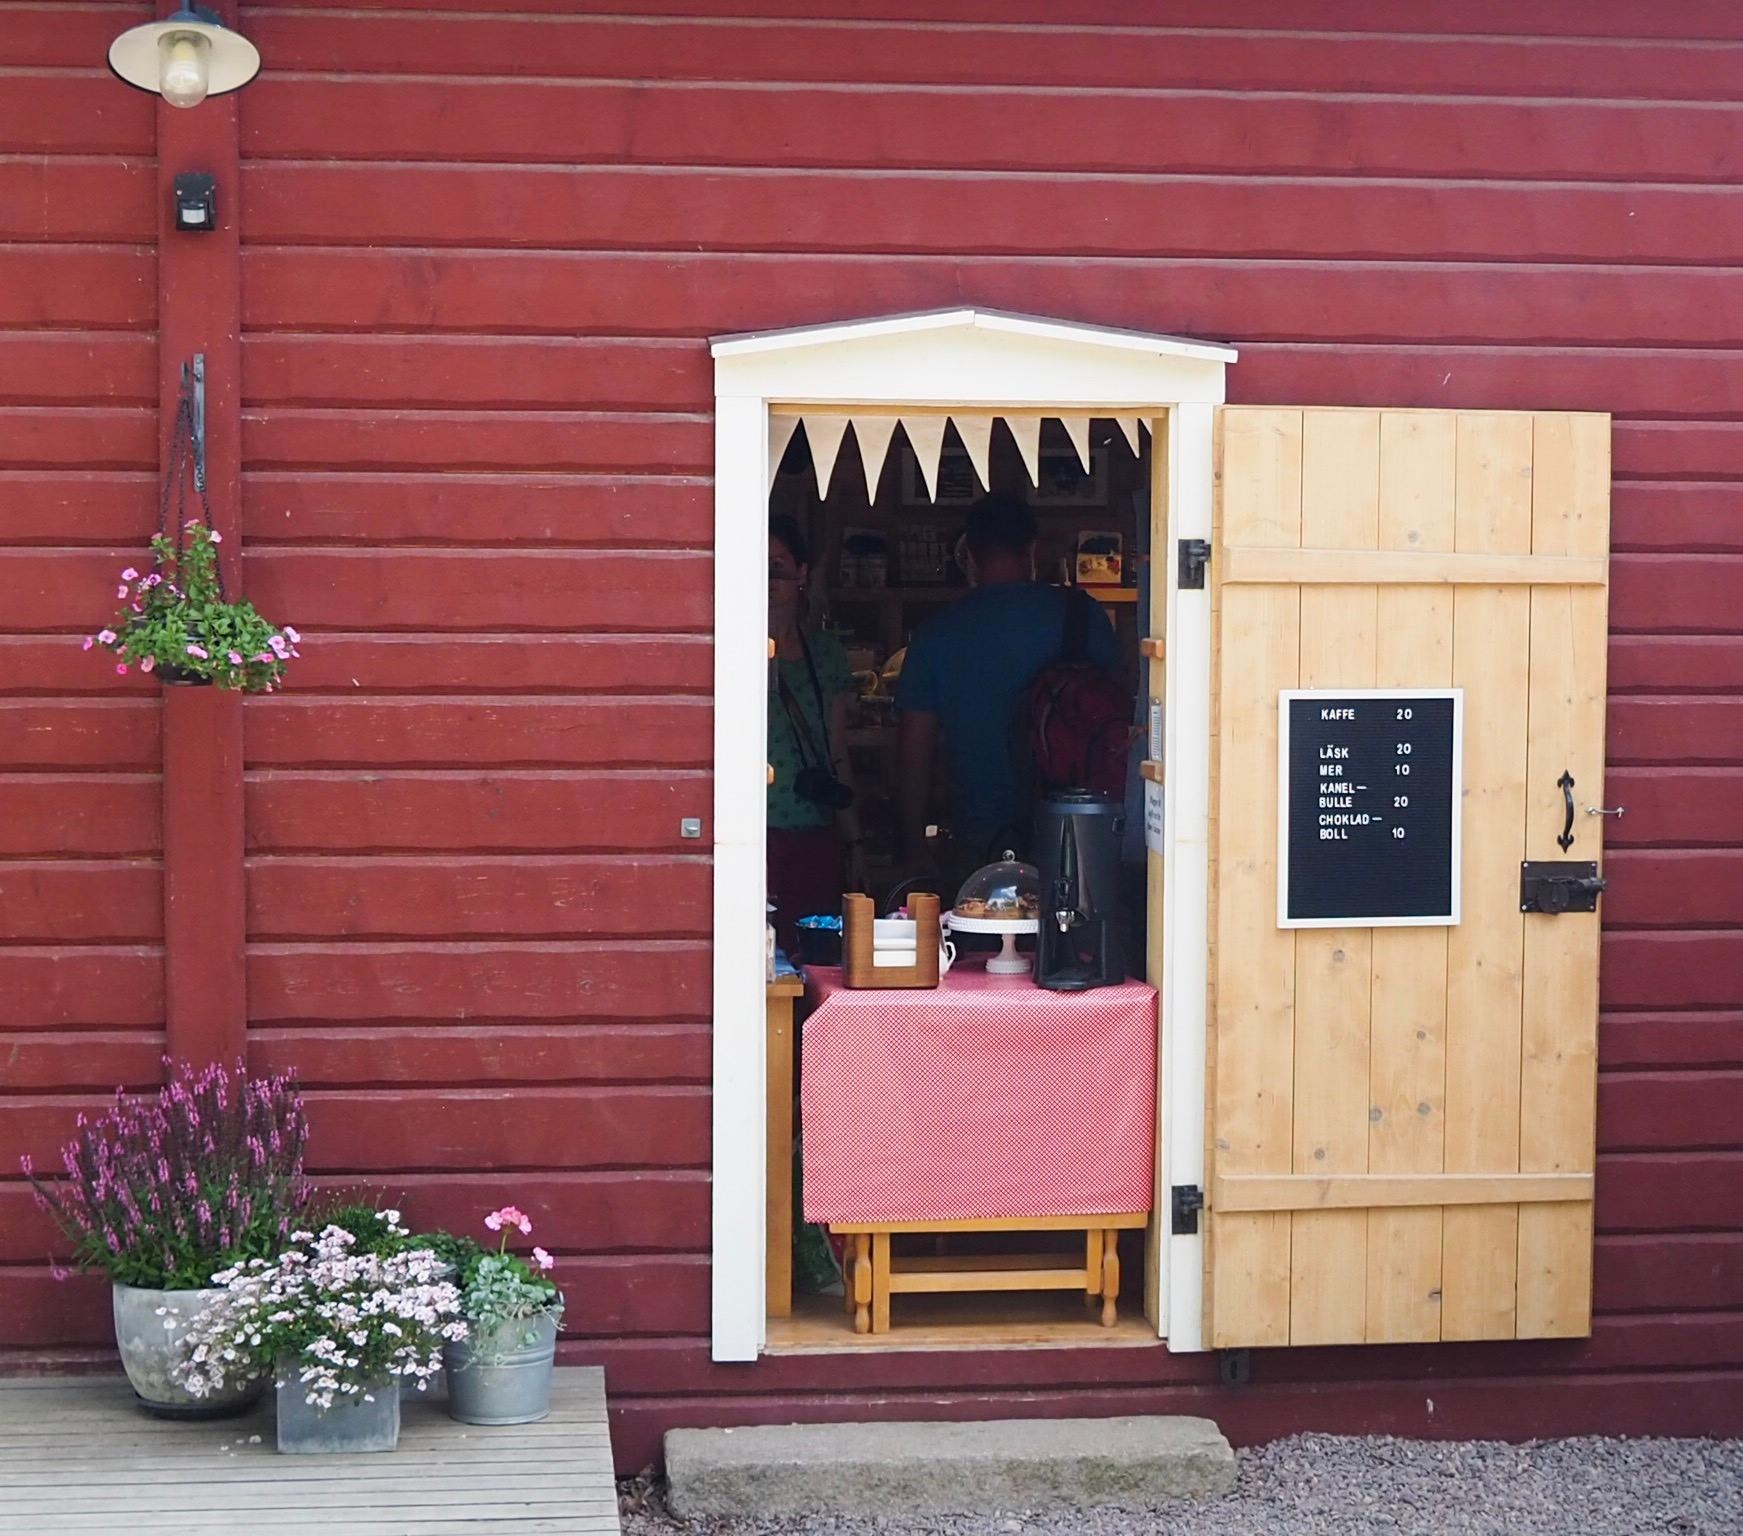 Urlaubsgrüße aus dem wunderschönen Småland! 🇸🇪 Hier gibts #zimtschnecken & #kaffee an jeder Ecke 🙌🏻